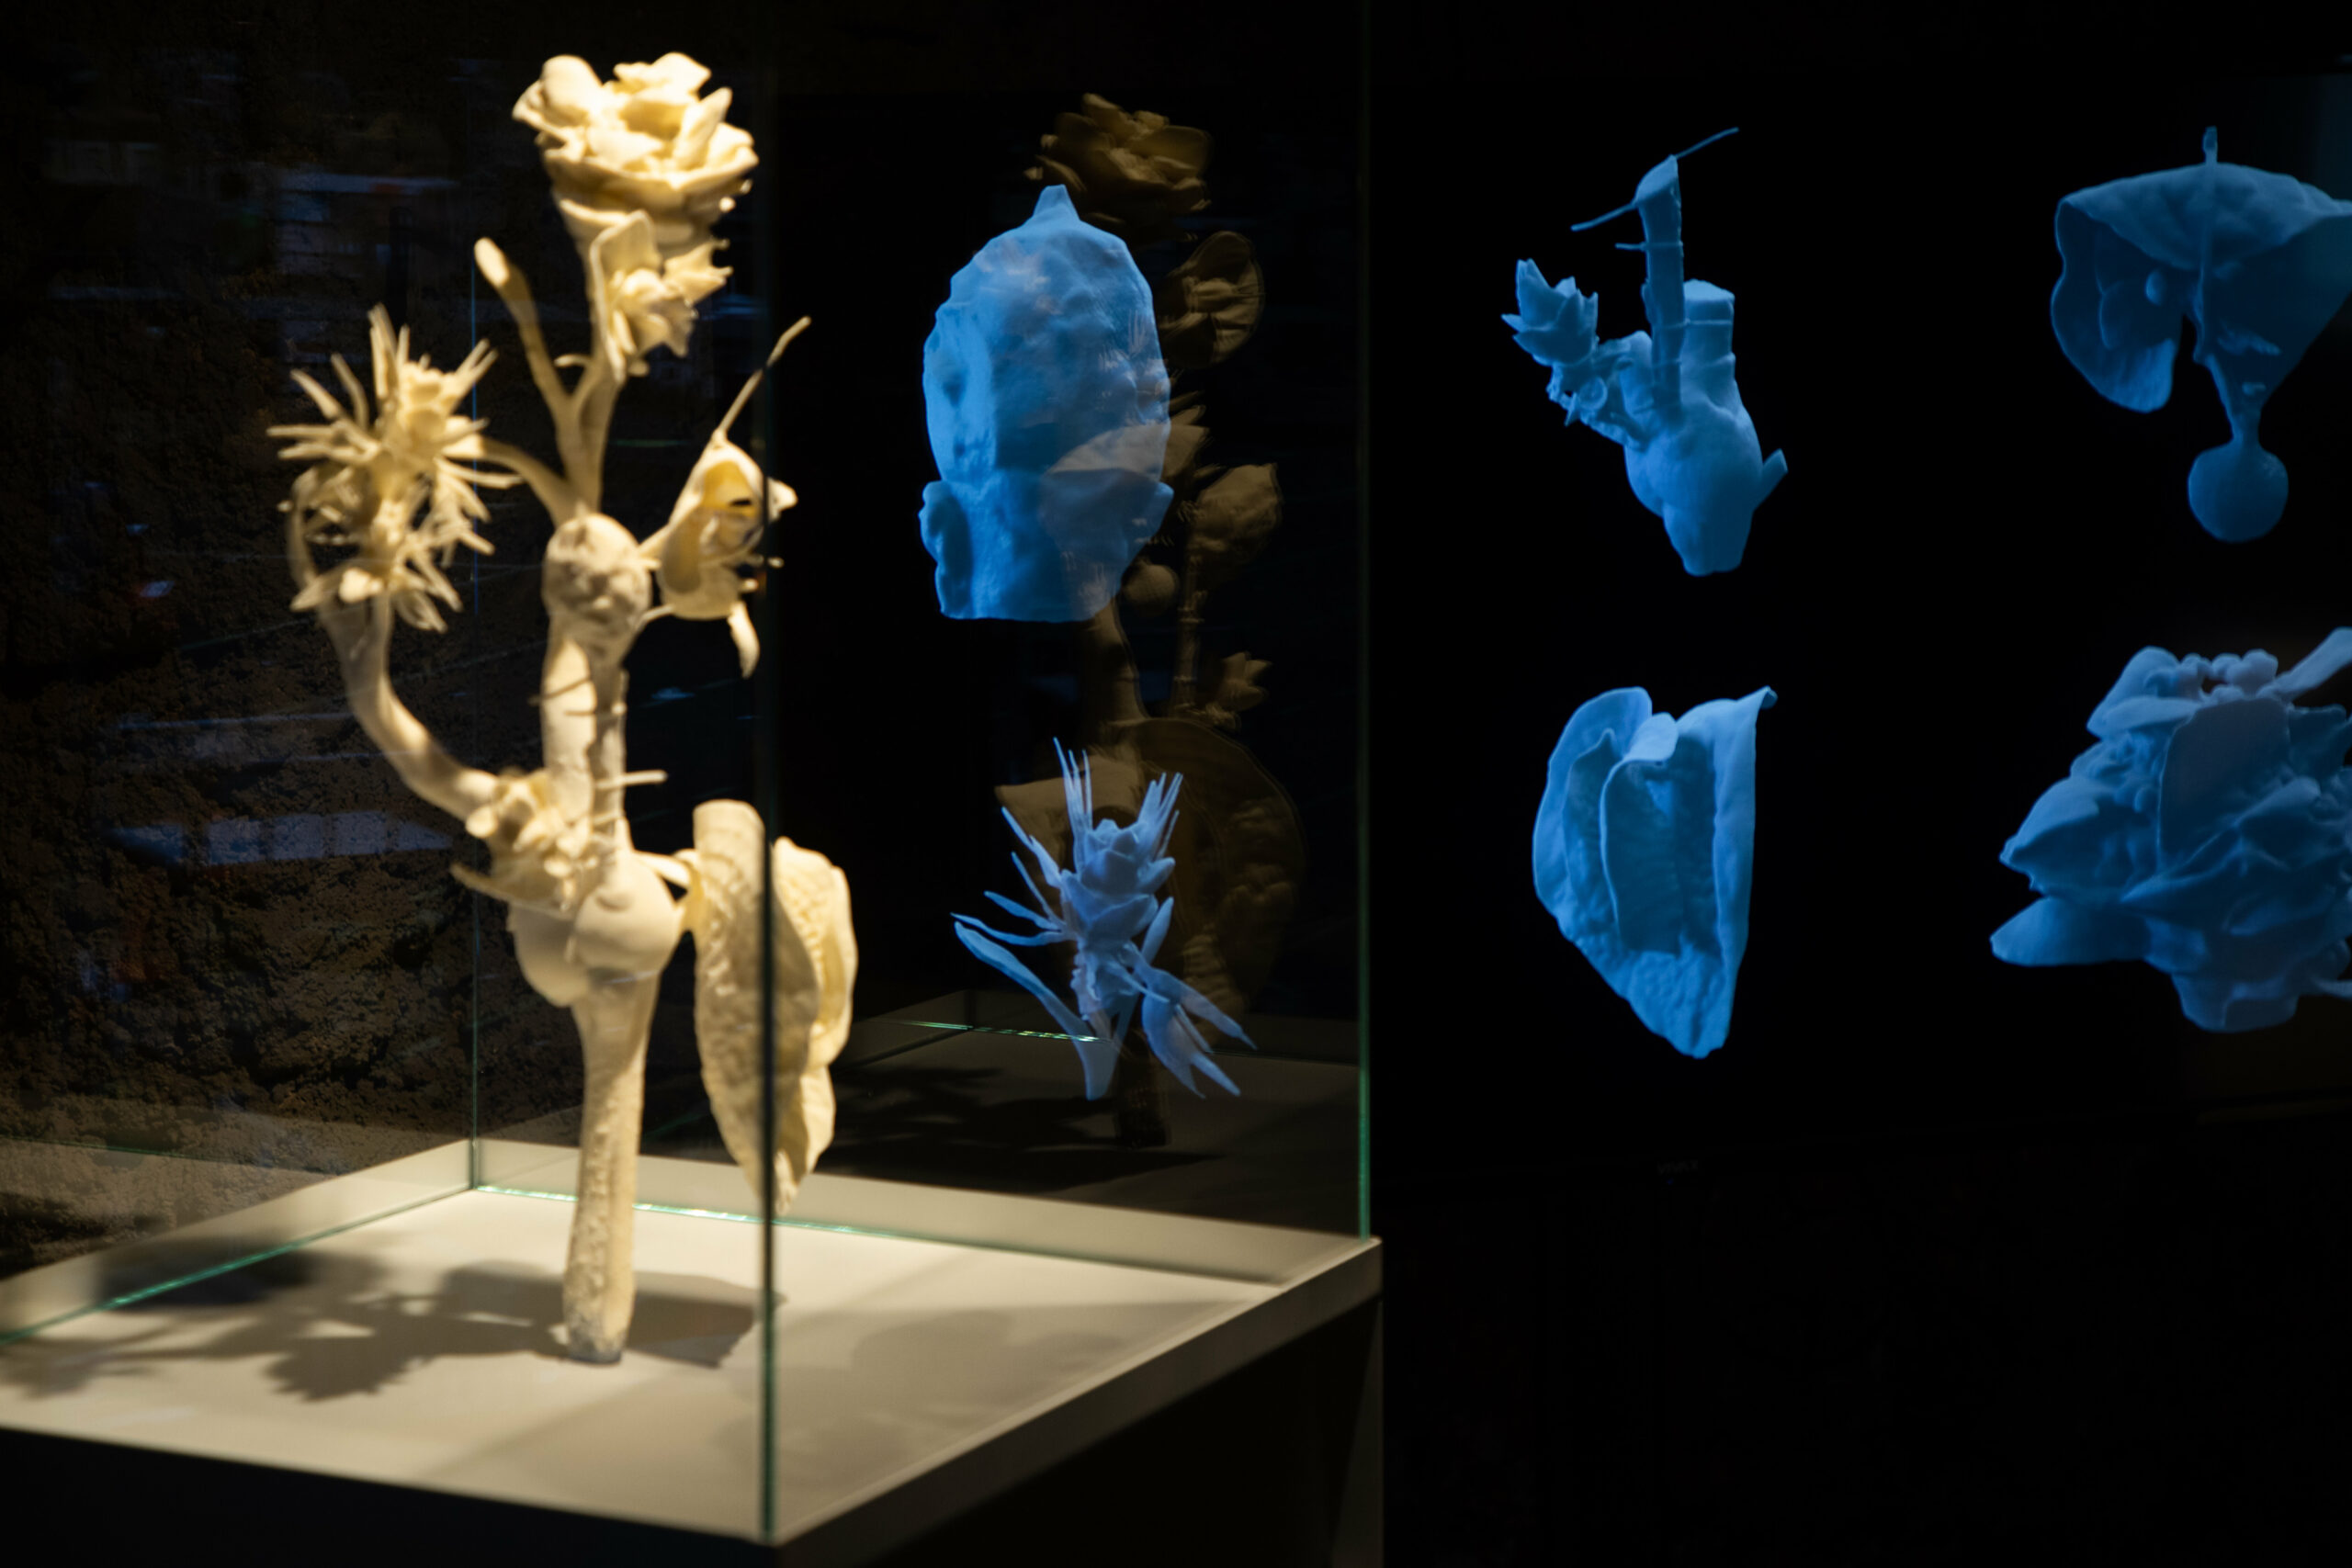 Marcin Rusak uses flowers to crystallize deterioration at the Slovenian Design Biennial BIO27